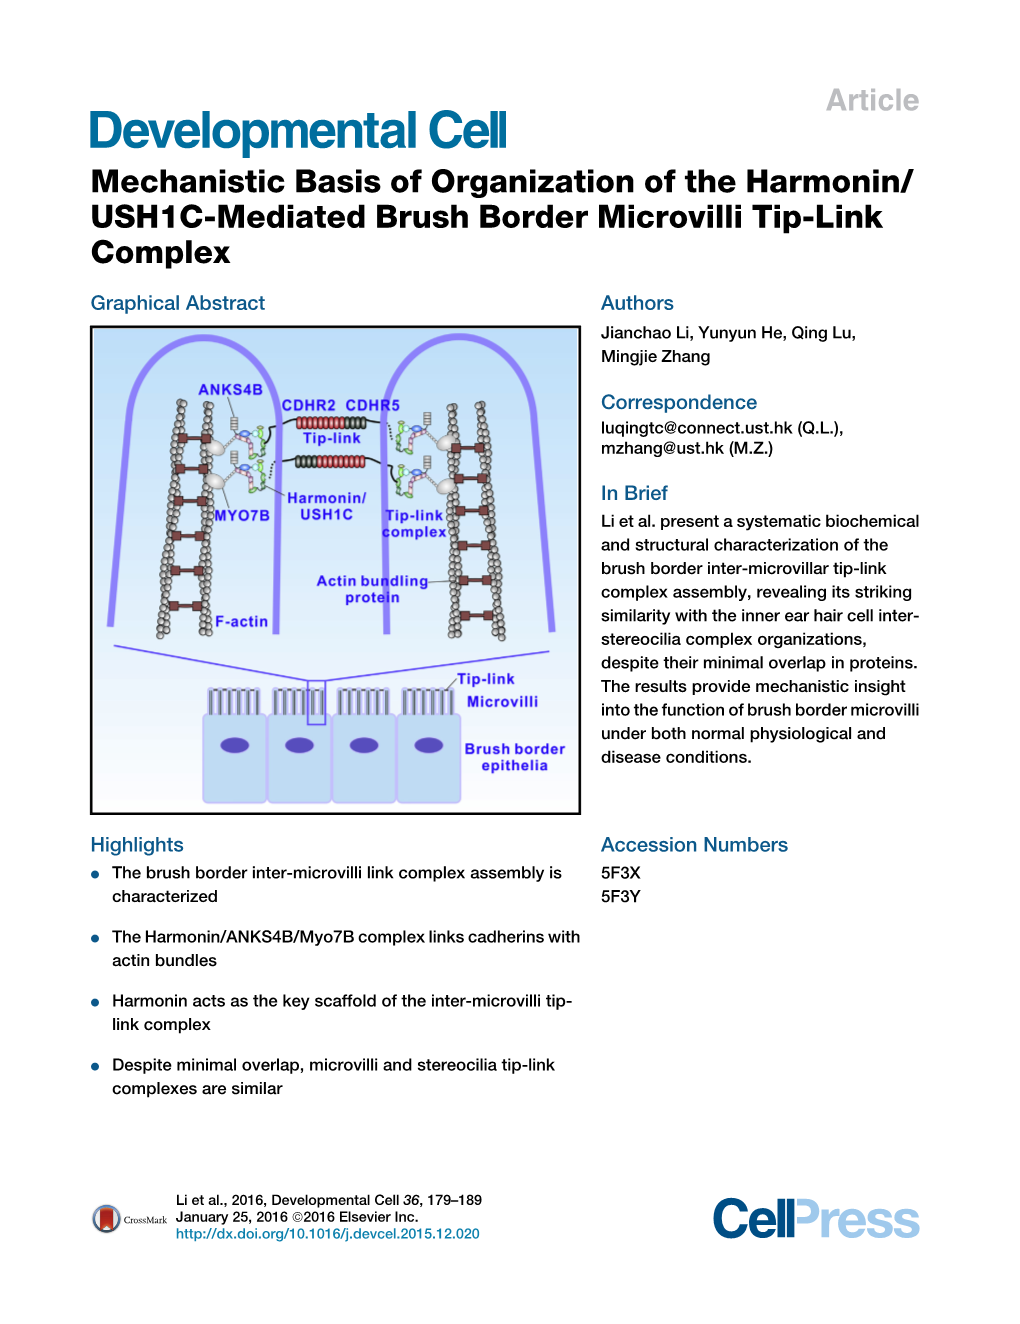 Mechanistic Basis of Organization of the Harmonin/ USH1C-Mediated Brush Border Microvilli Tip-Link Complex